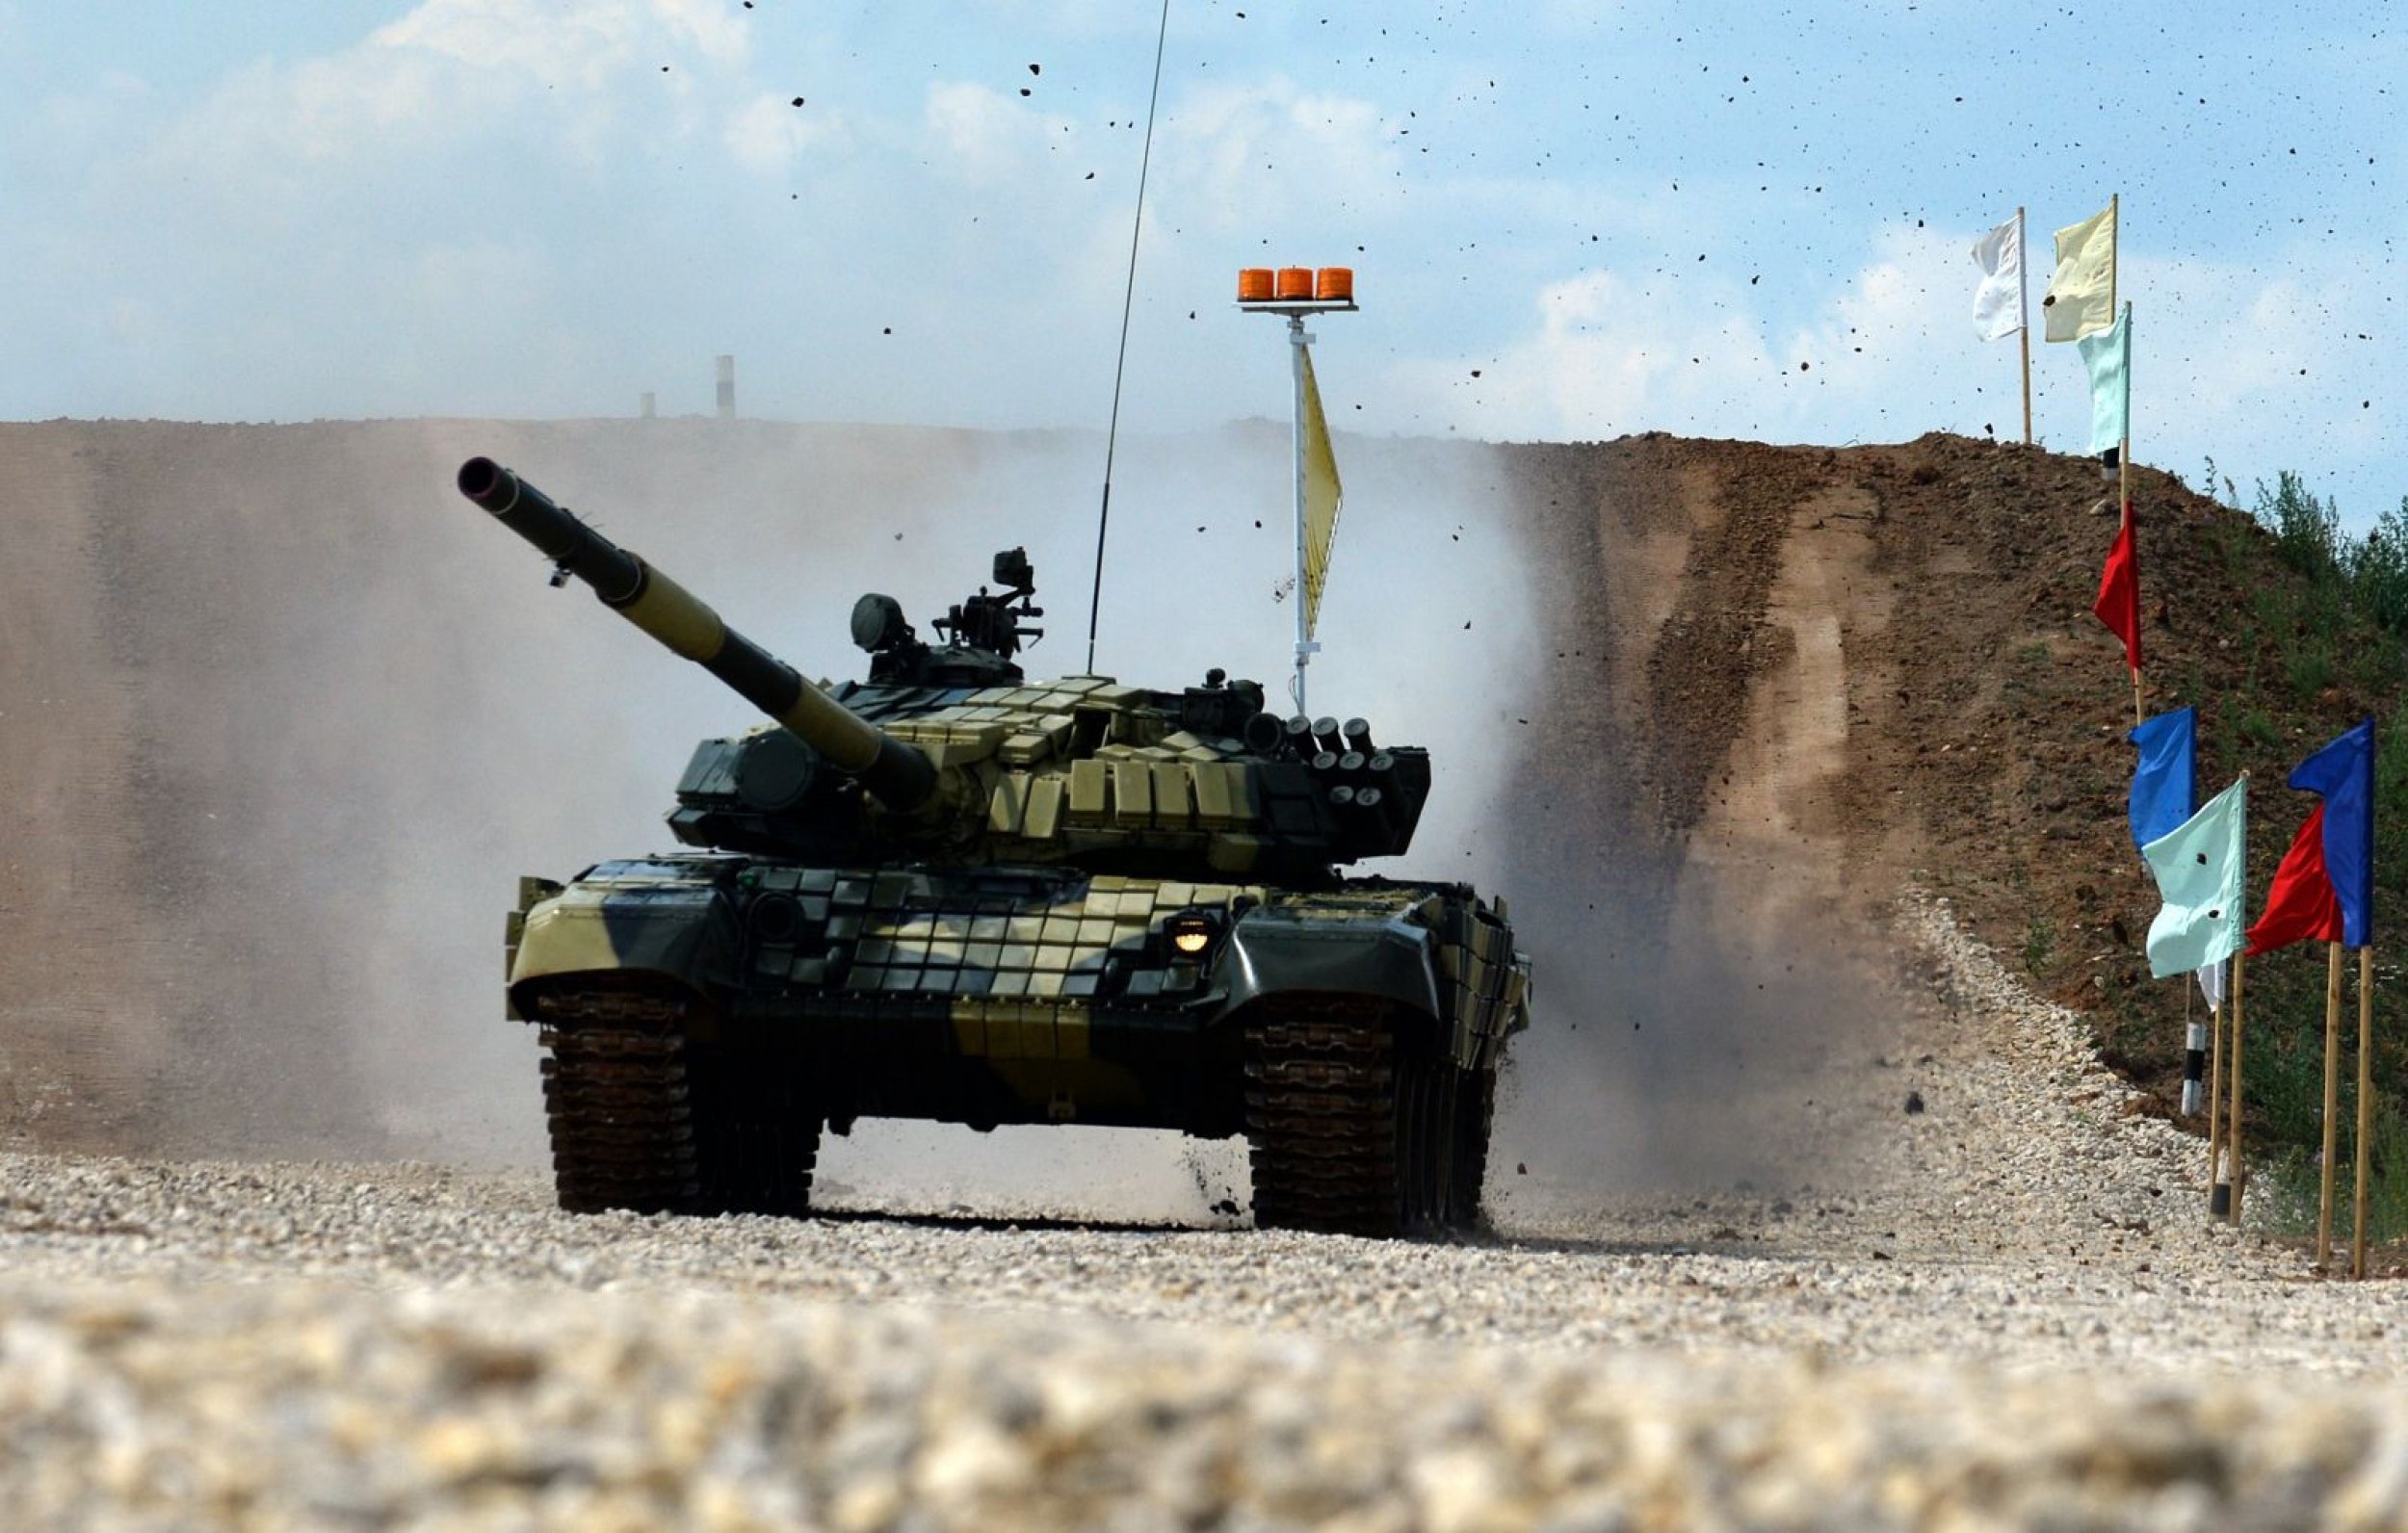 Tank Biathlon Games Open In Russia